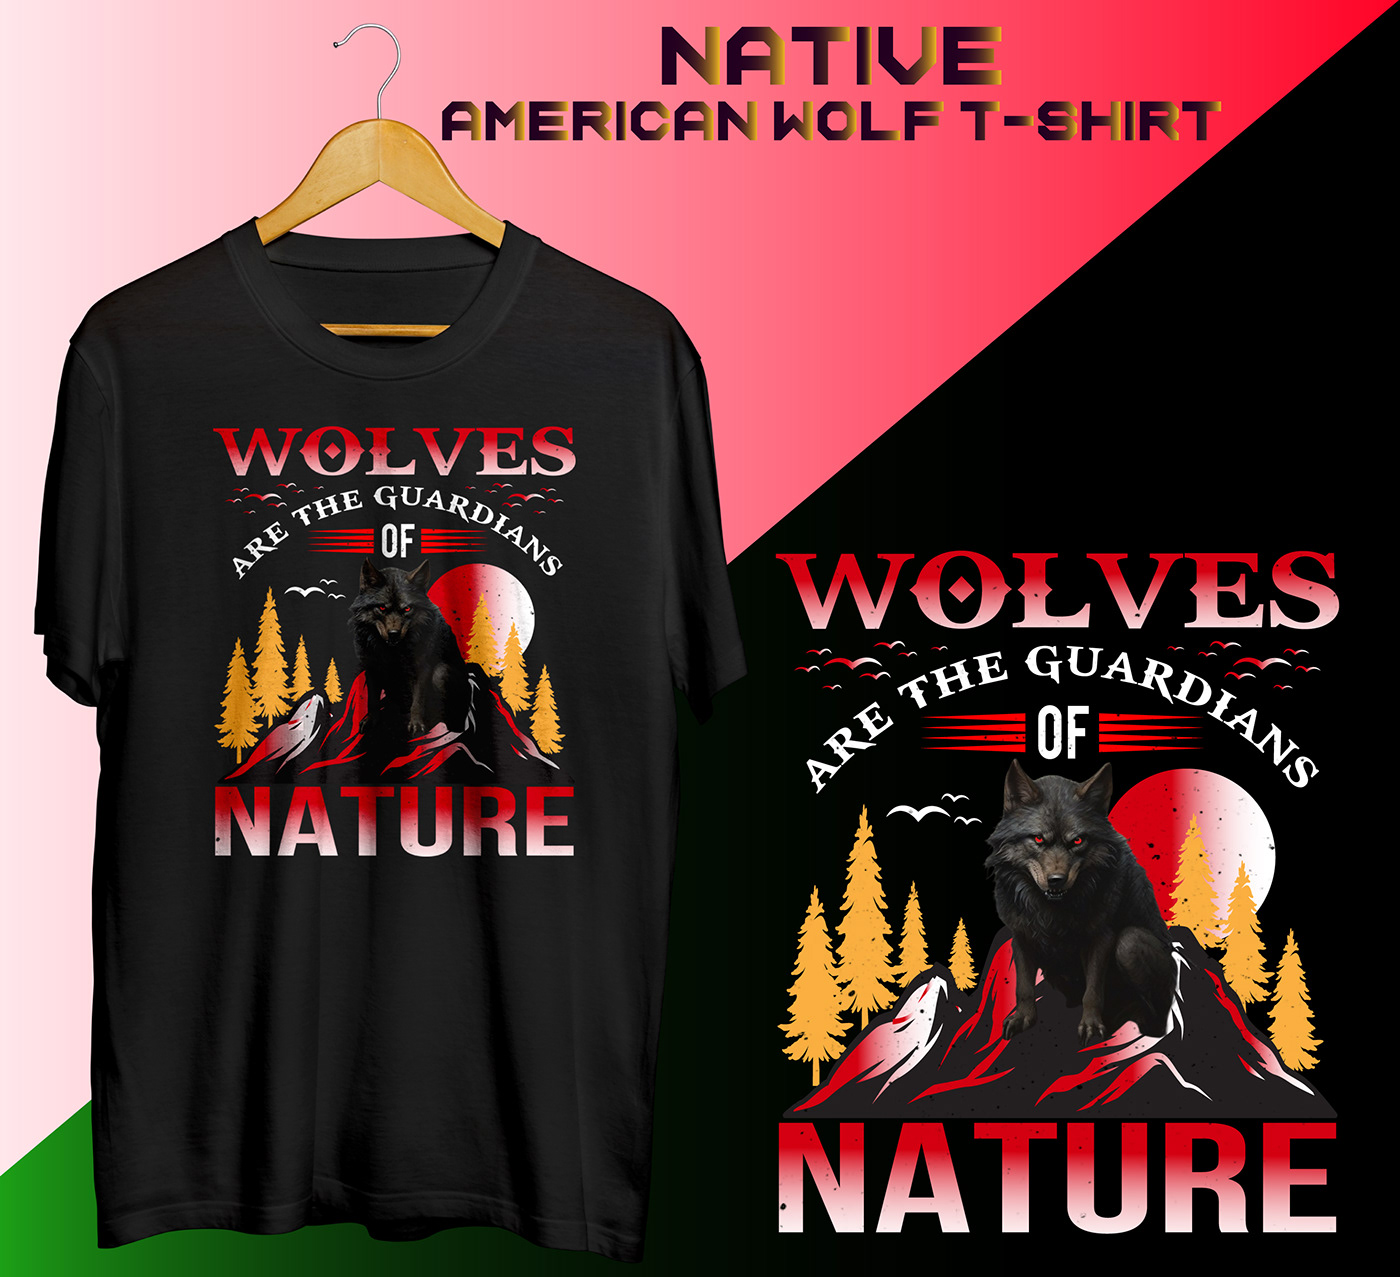 native american Native American Art amarican T-shirt American T-Shirt american t-shirt design american t-shirt wolft native american design NATIVE AMERICAN T-SHIRT Native American T-Shirts native americans